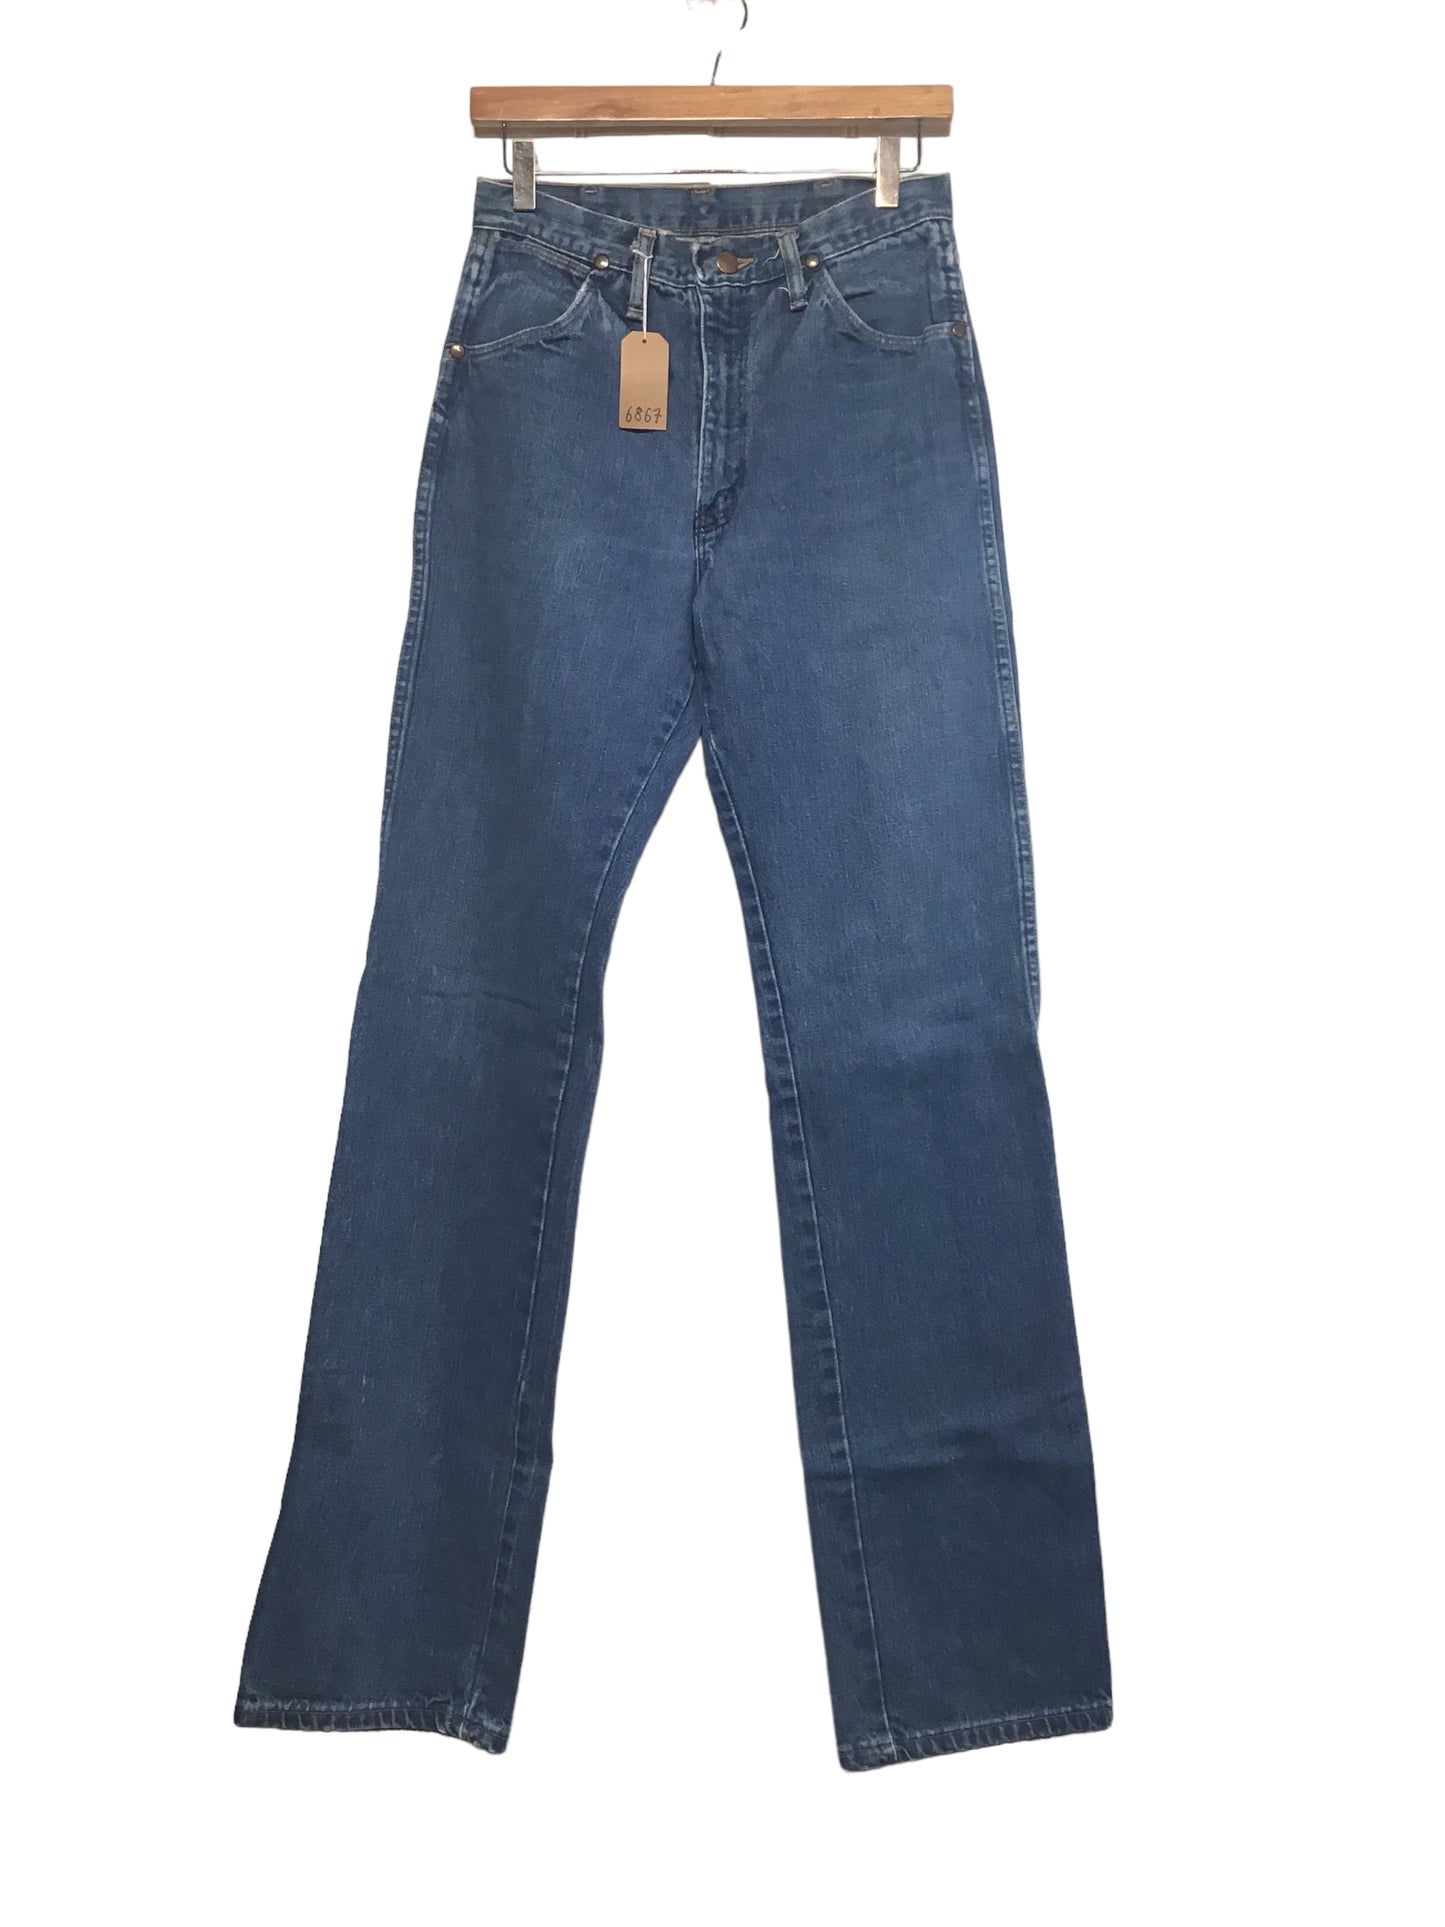 Wrangler Jeans (29x35)